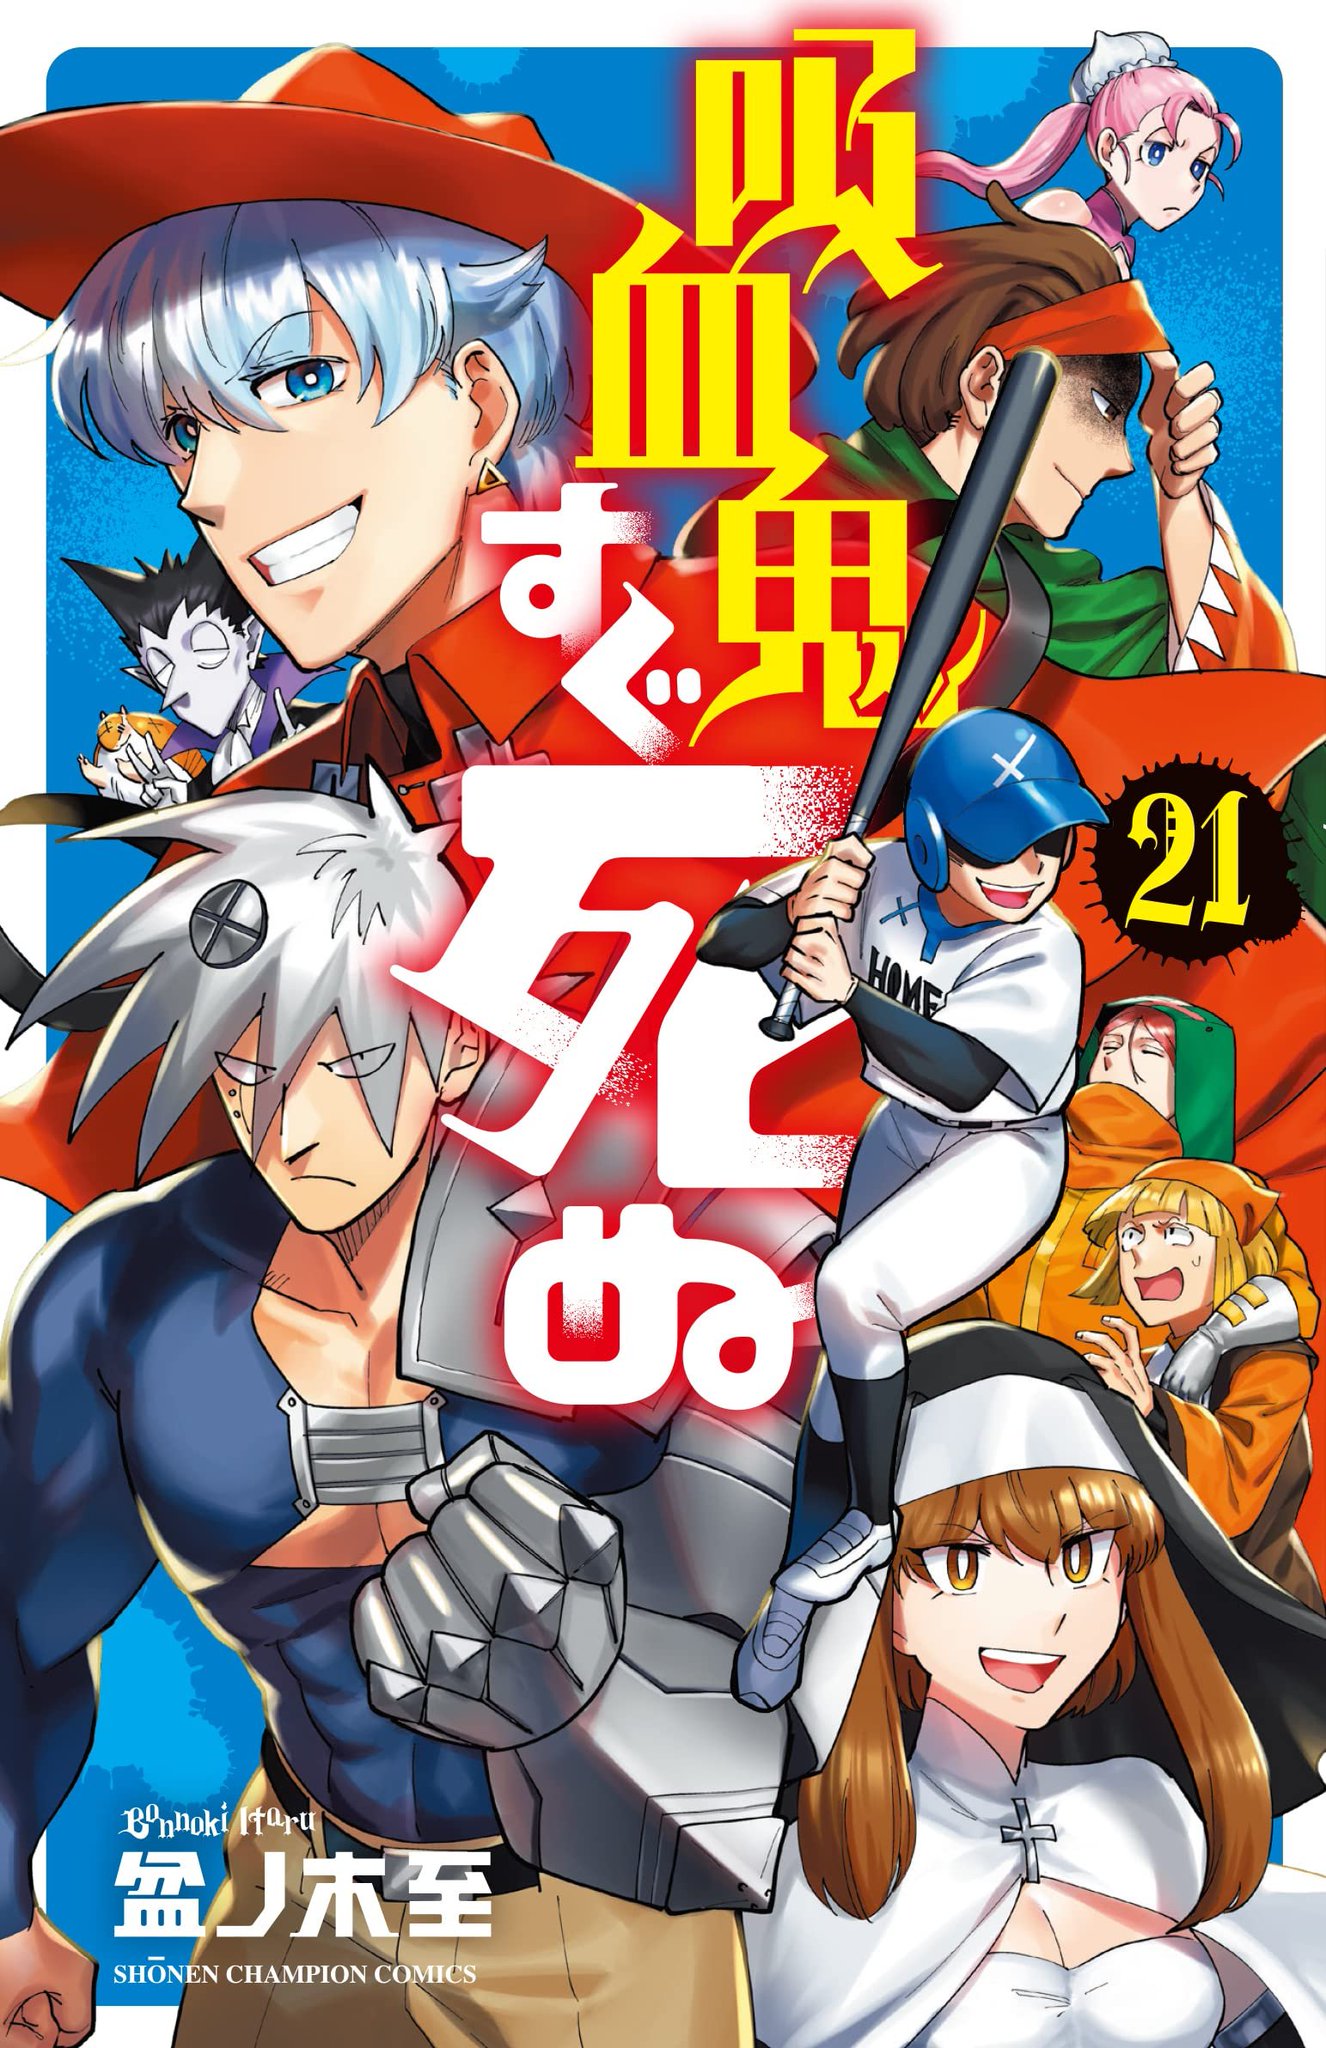 Manga Mogura RE on X: Kyuuketsuki sugu shinu (The Vampire dies in no  time) by Itaru Bonnoki is getting a Stage Play Adaption in June, 2023.   / X